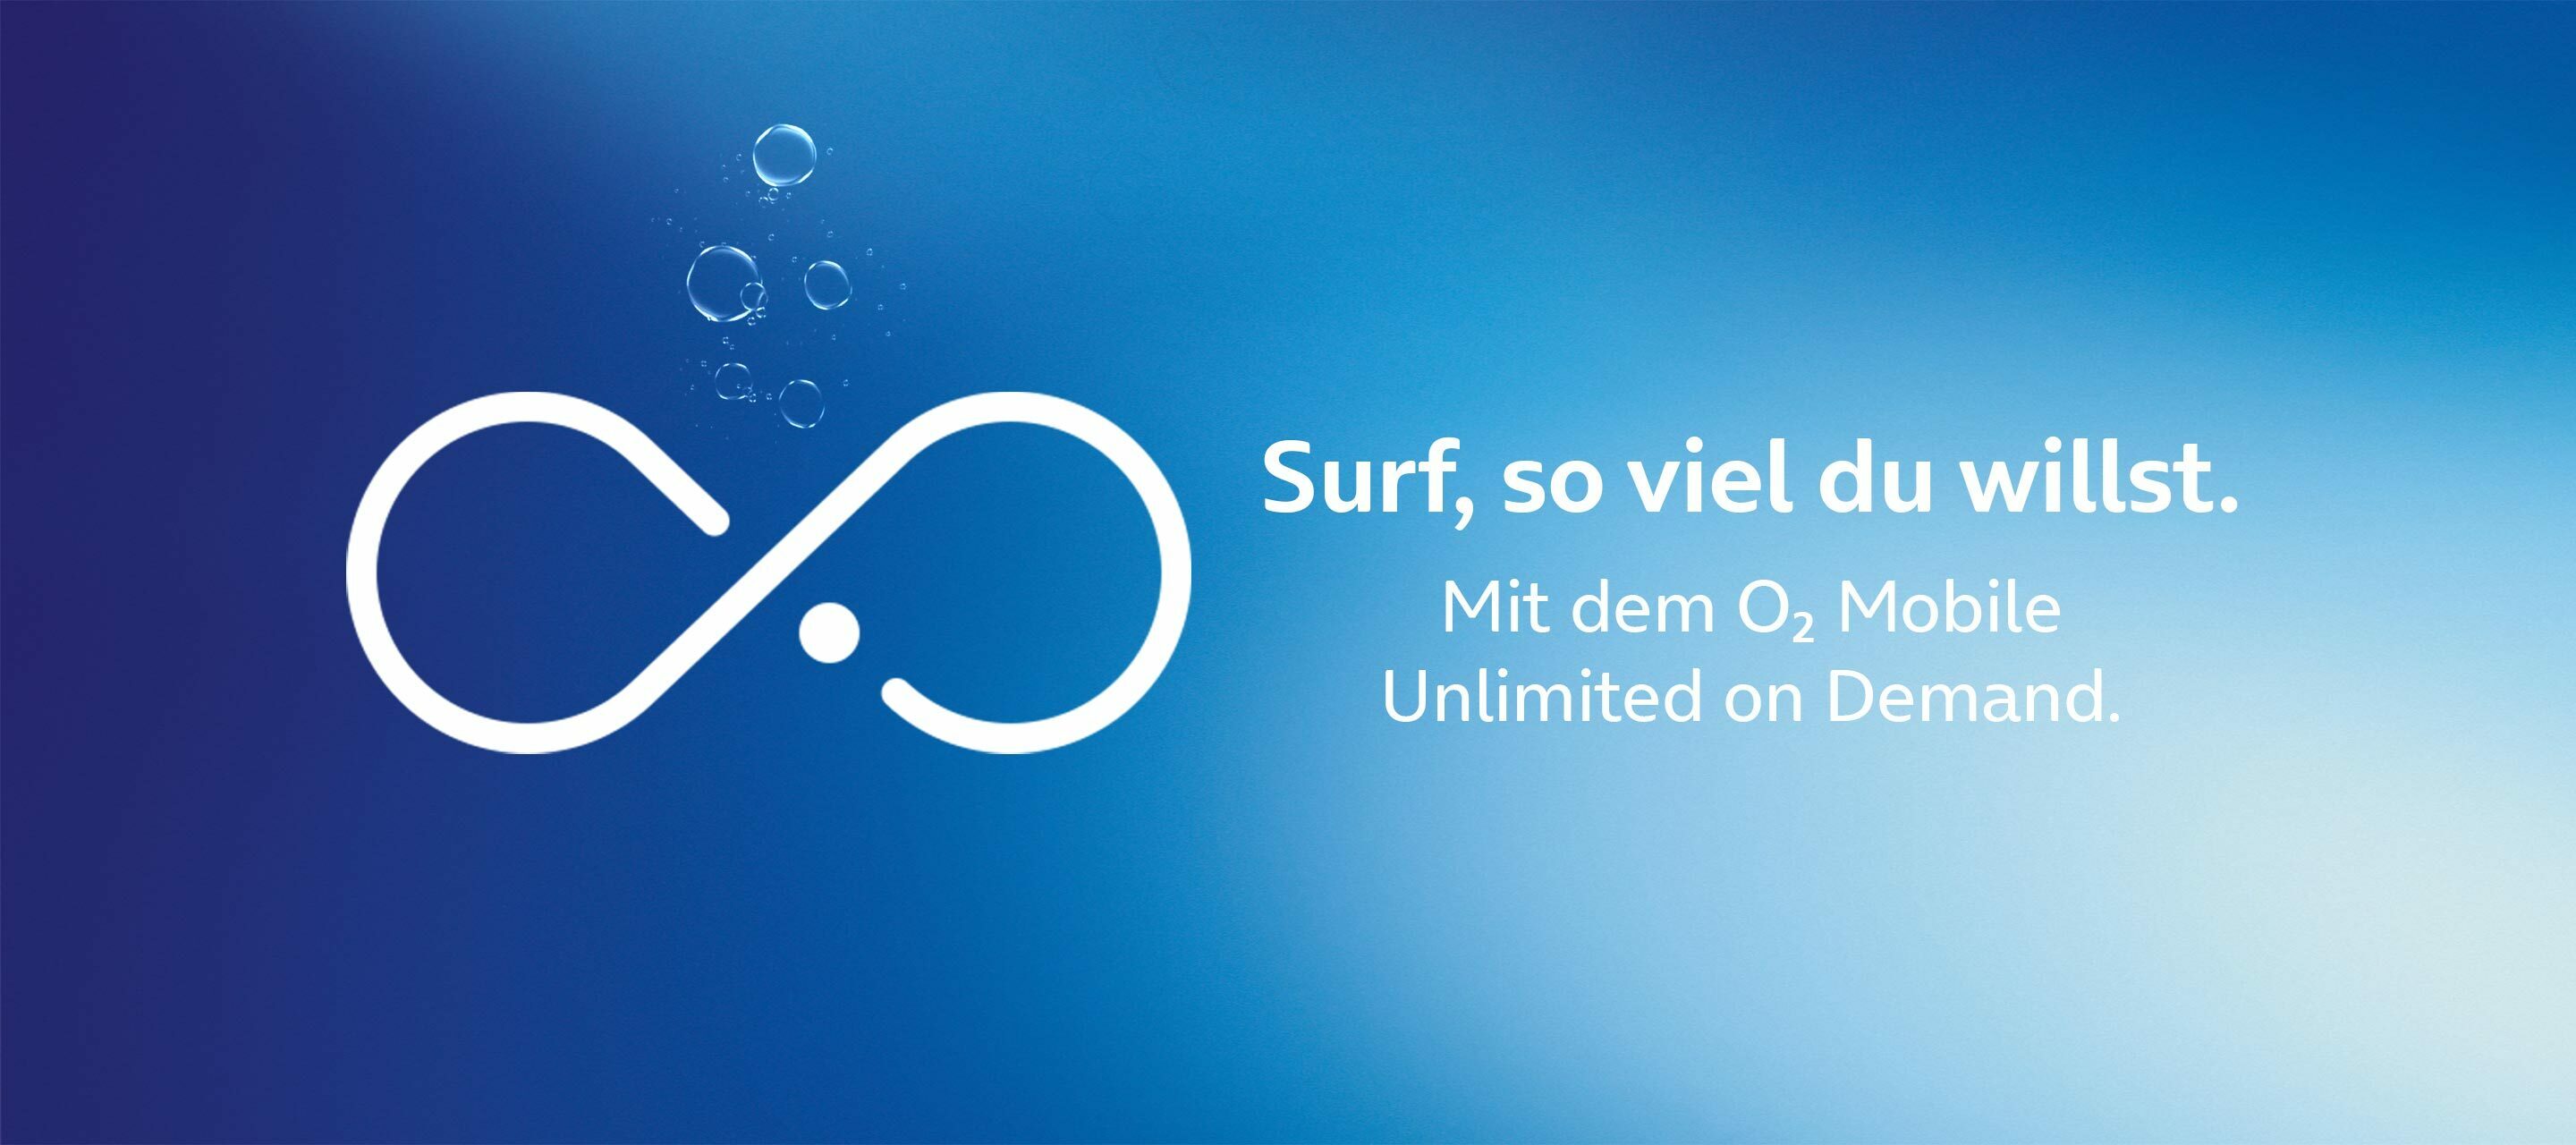 Neu bei uns - Der O₂ Mobile Unlimited on Demand